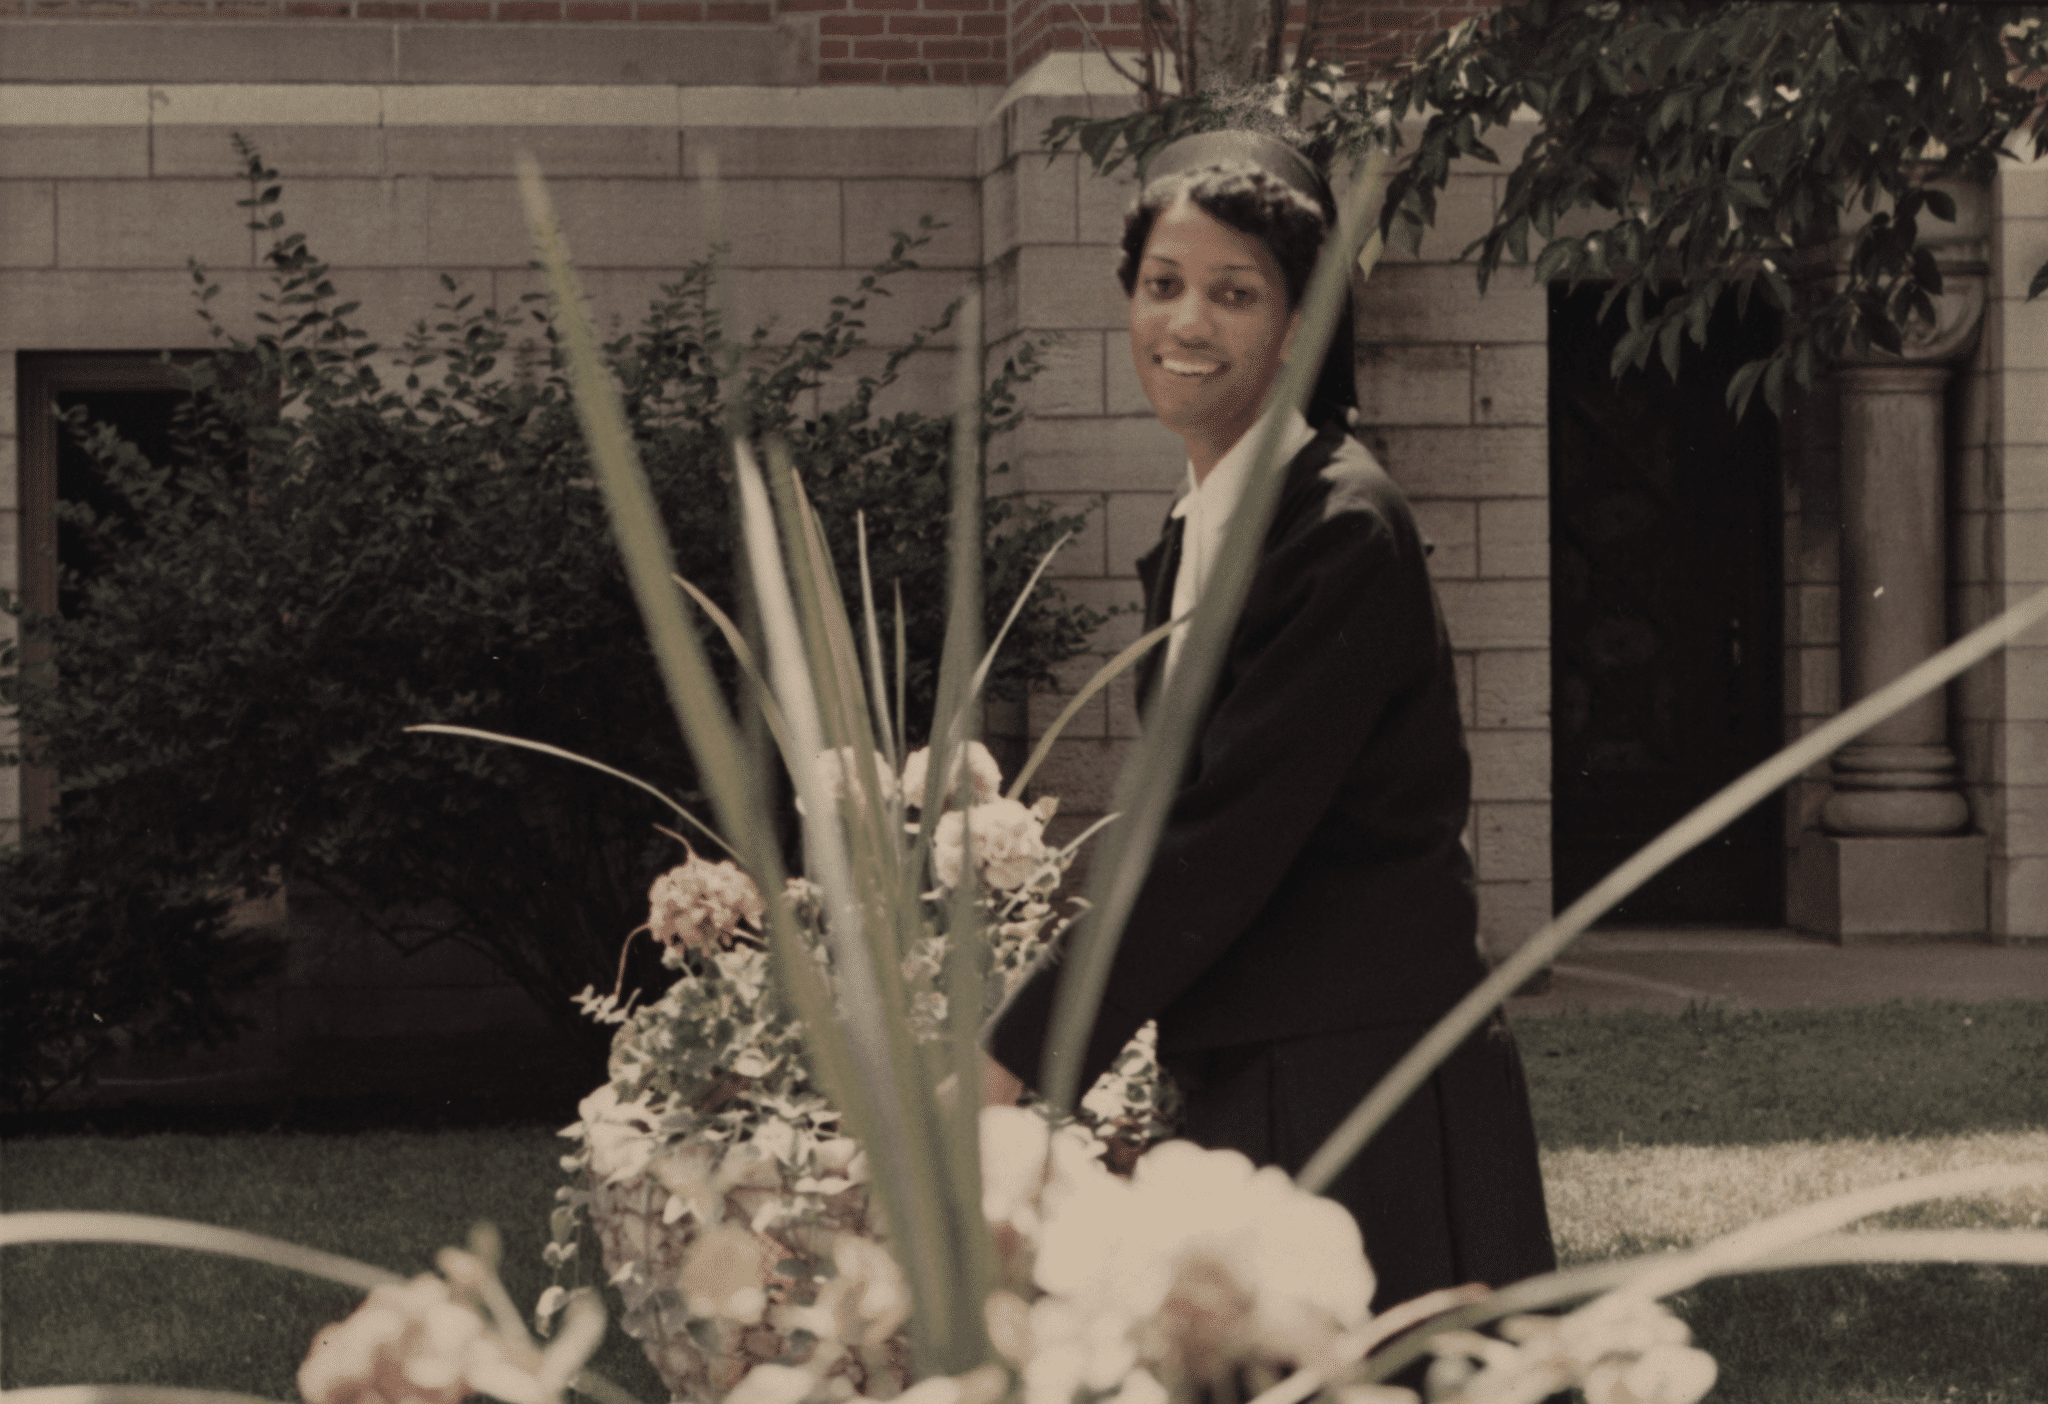 Thea Bowman smiling near flowers